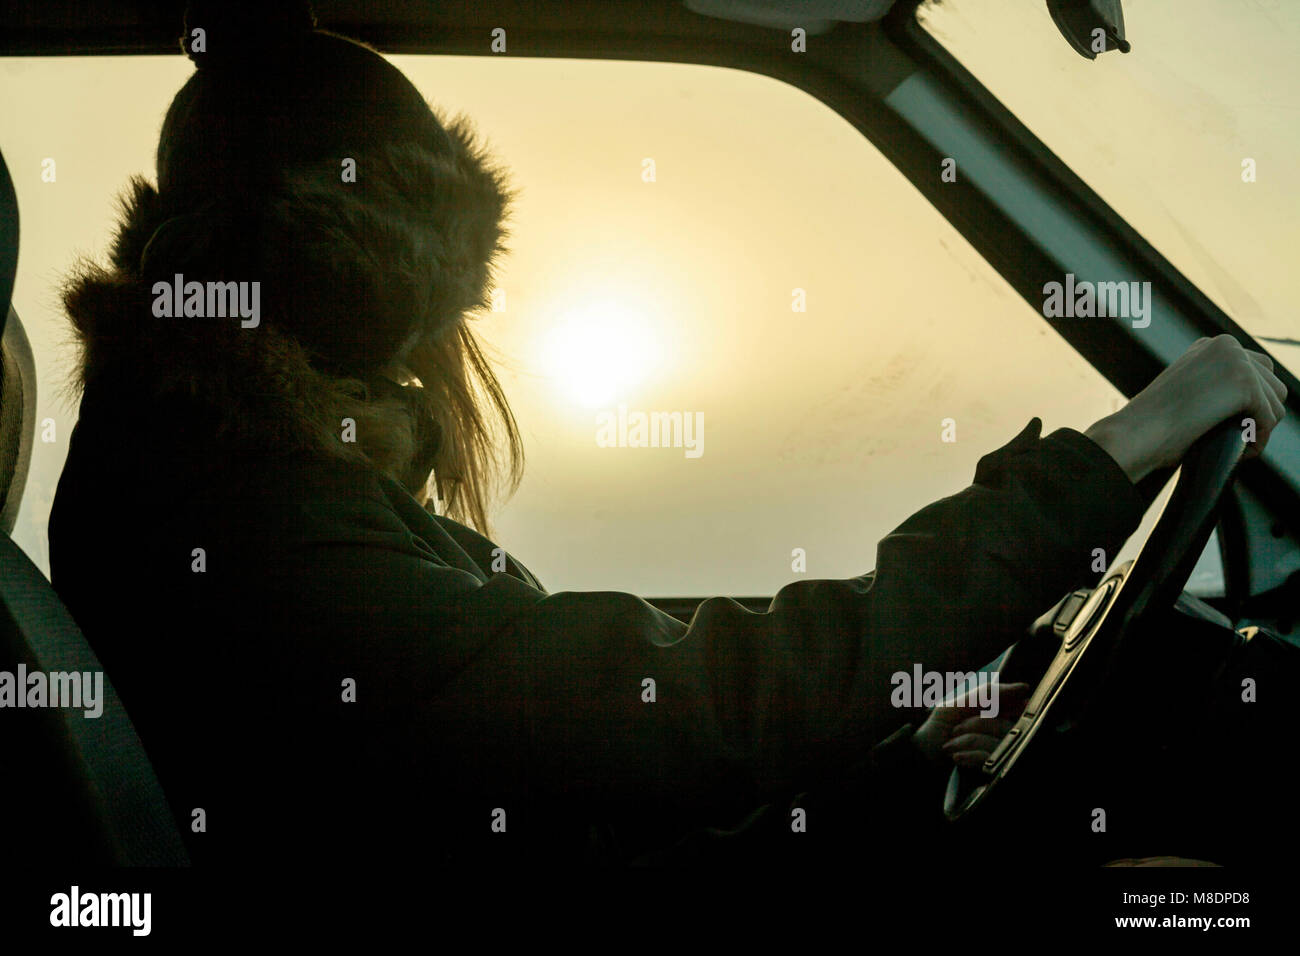 Woman behind wheel of car Stock Photo